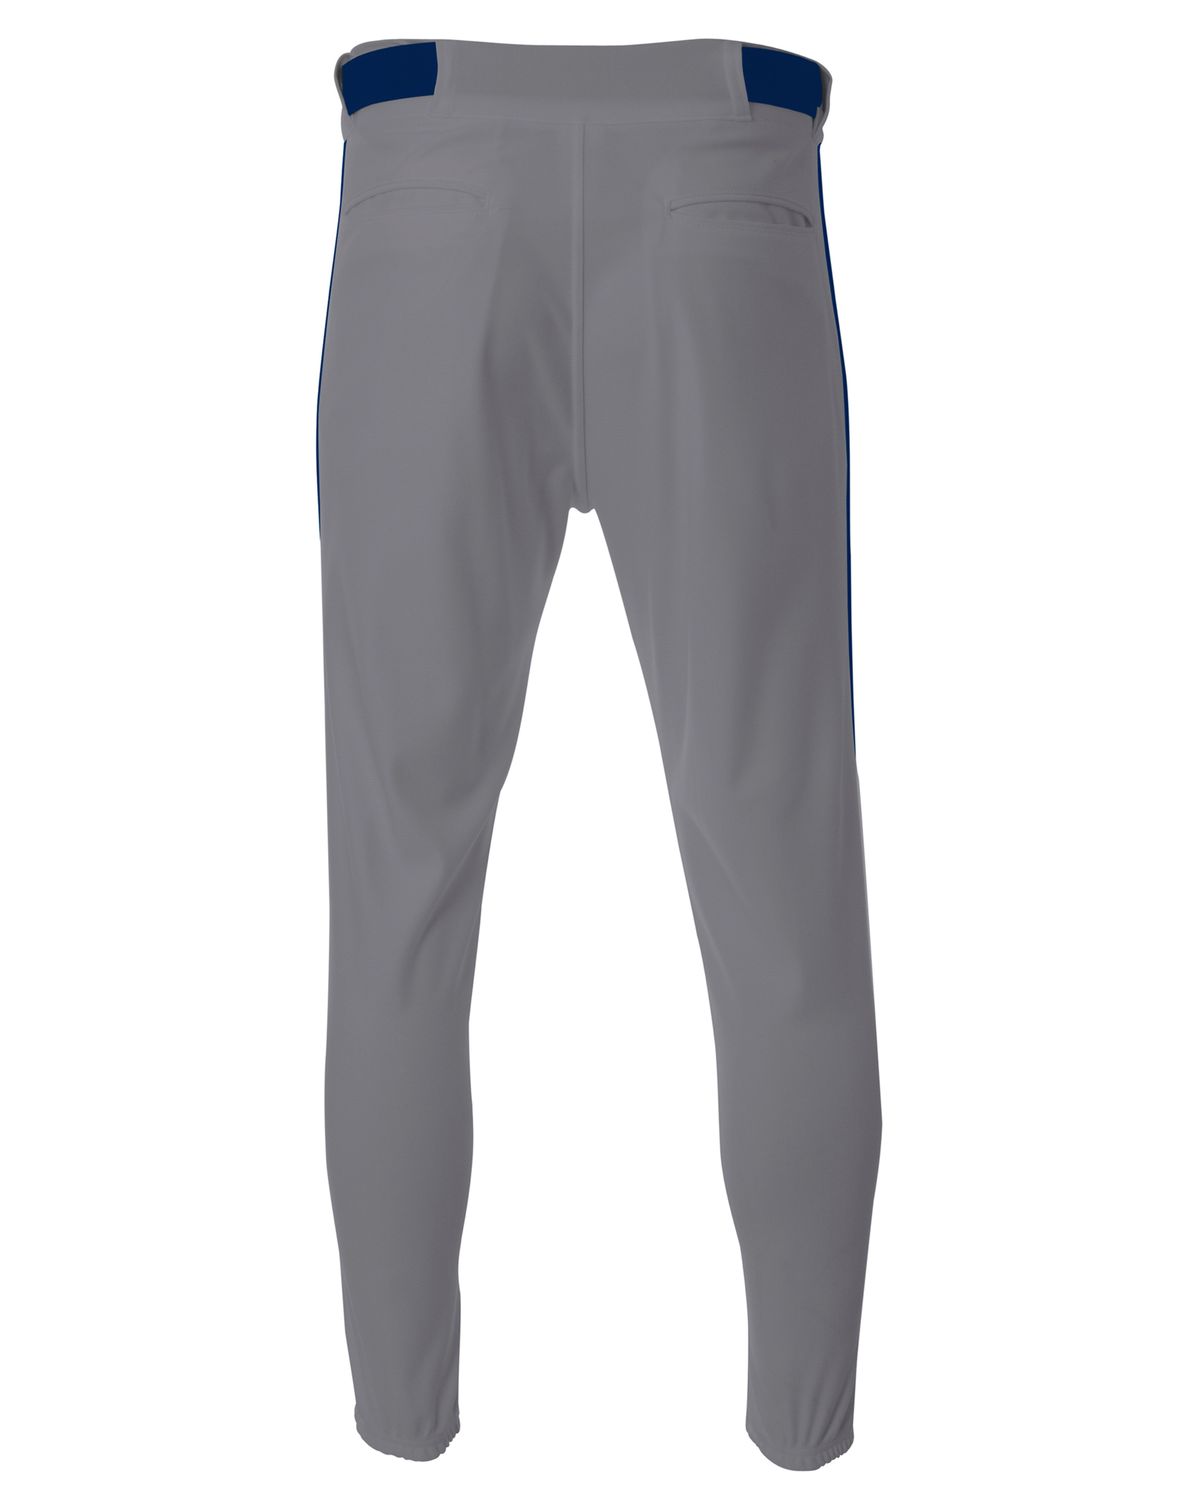 A4 N6178 Pro Style Elastic Bottom Baseball Pants - White/ Black - L